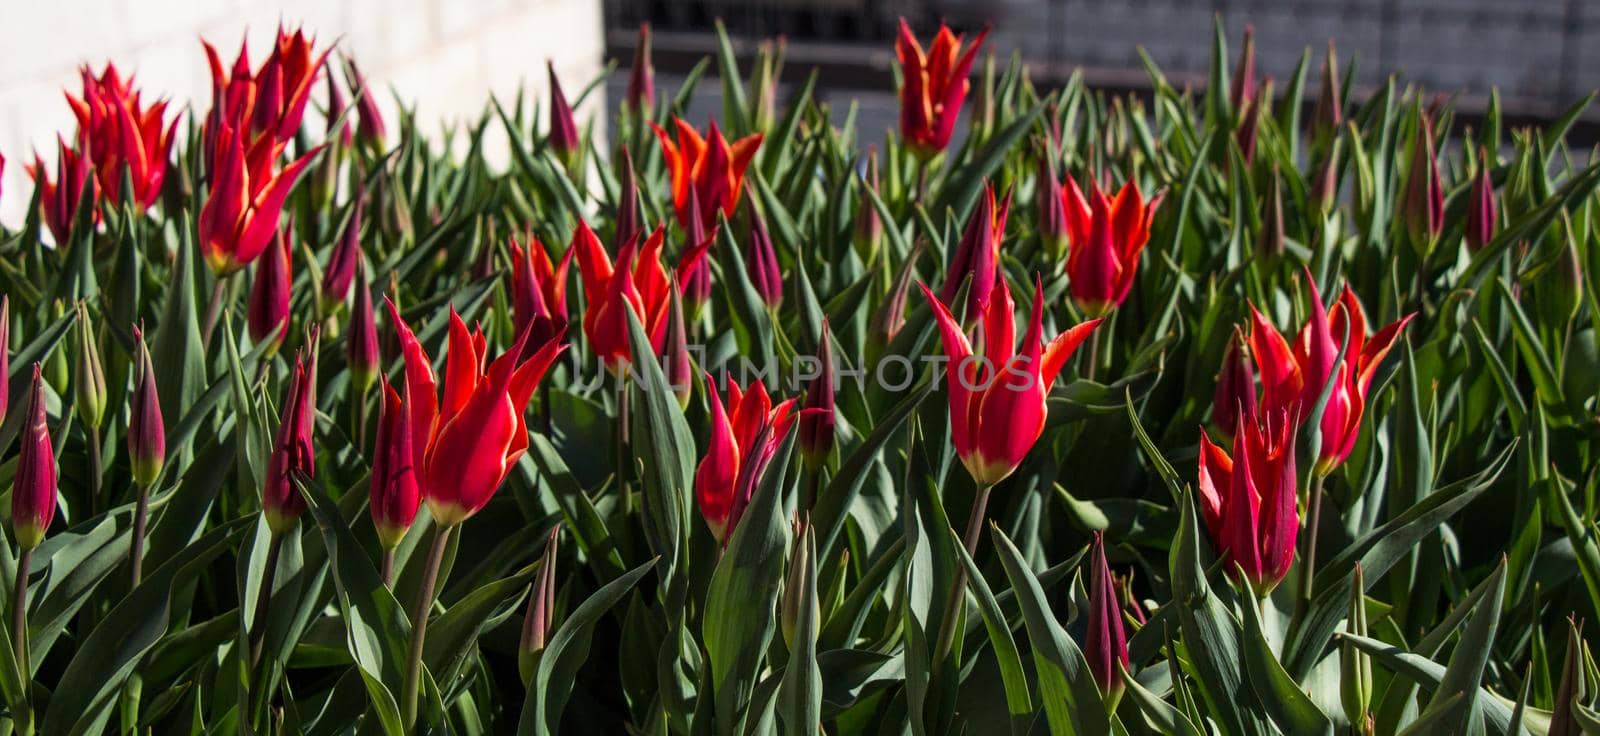 Red color Tulips Bloom in Spring  by berkay